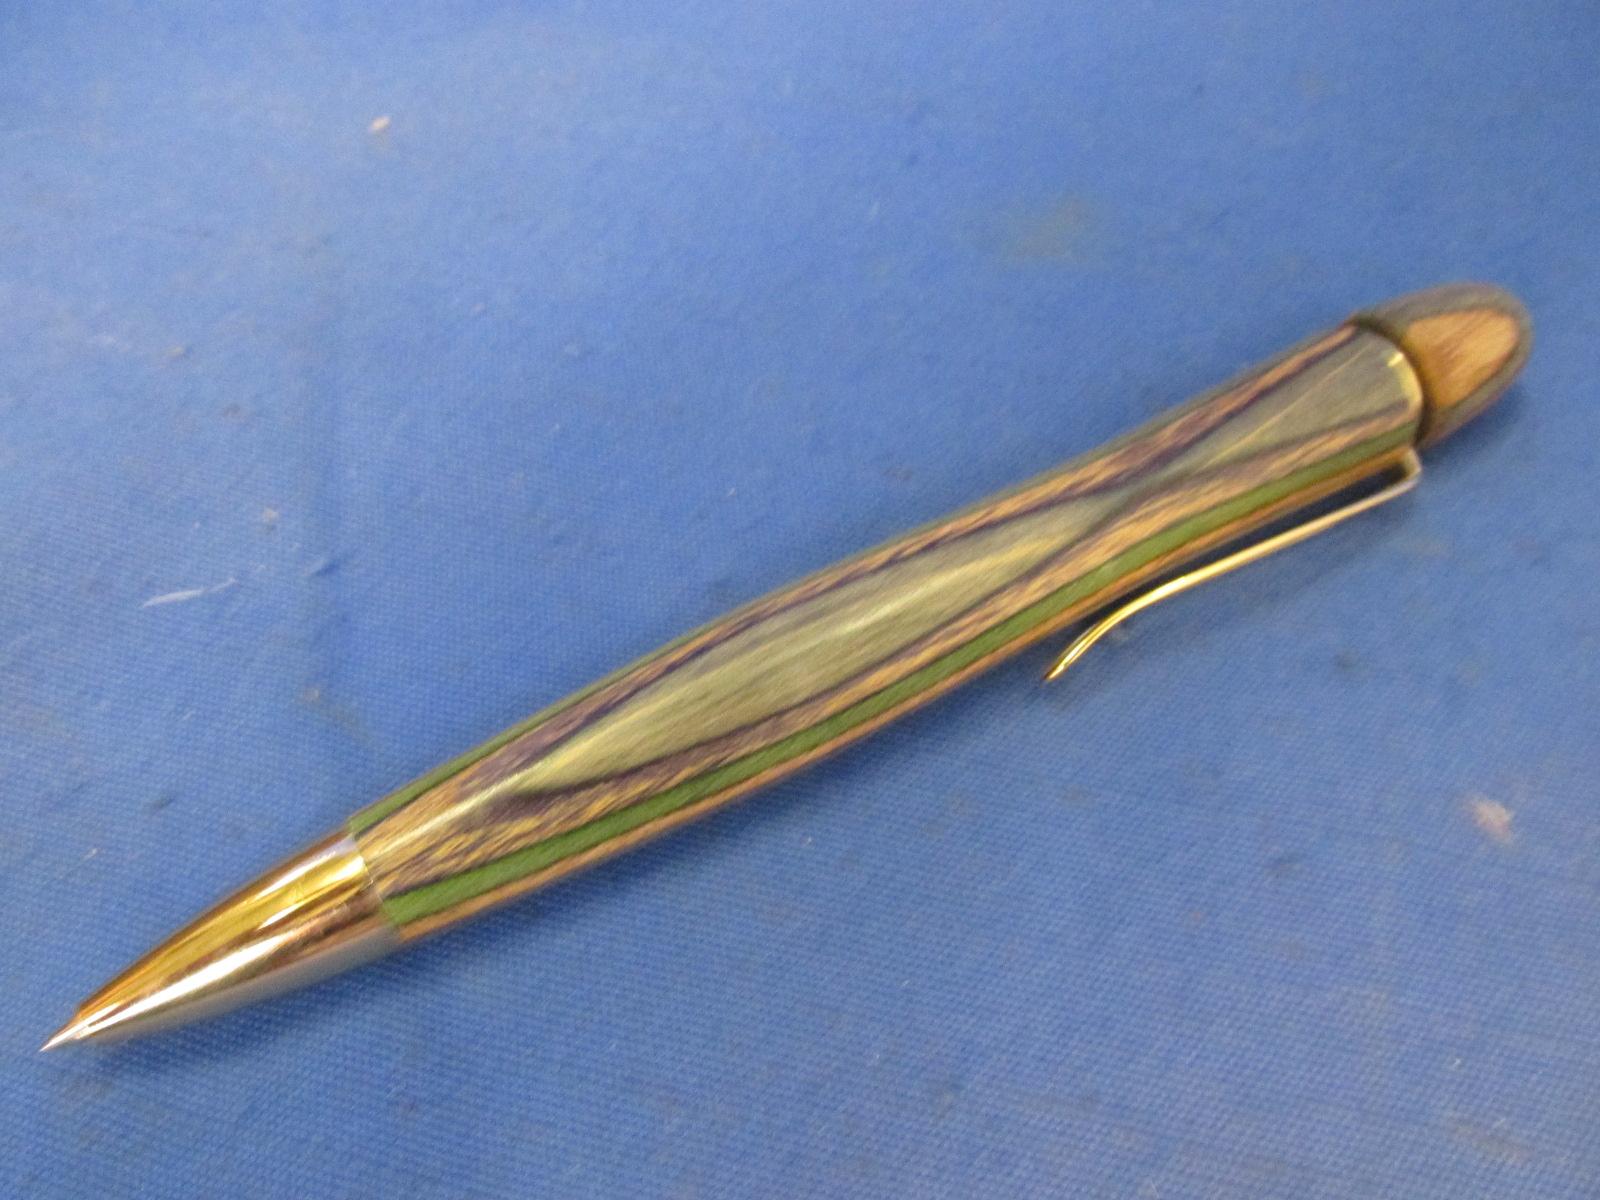 5 Fancy Pens : Pierre Cardin & Wooden Body Pens – Not tested for writing